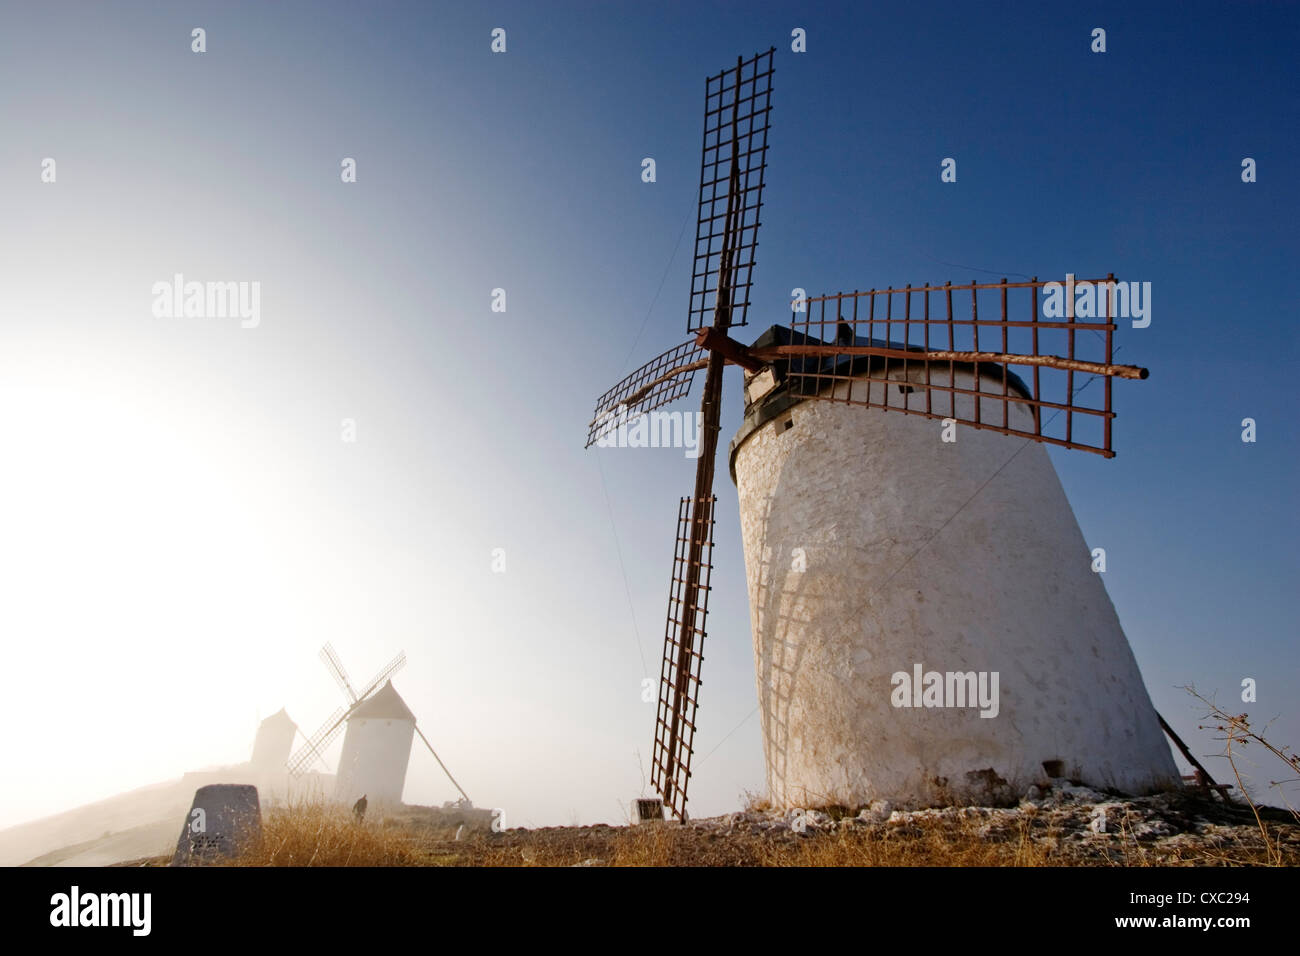 Windmills in Consuegra Toledo Castilla La Mancha Spain Stock Photo